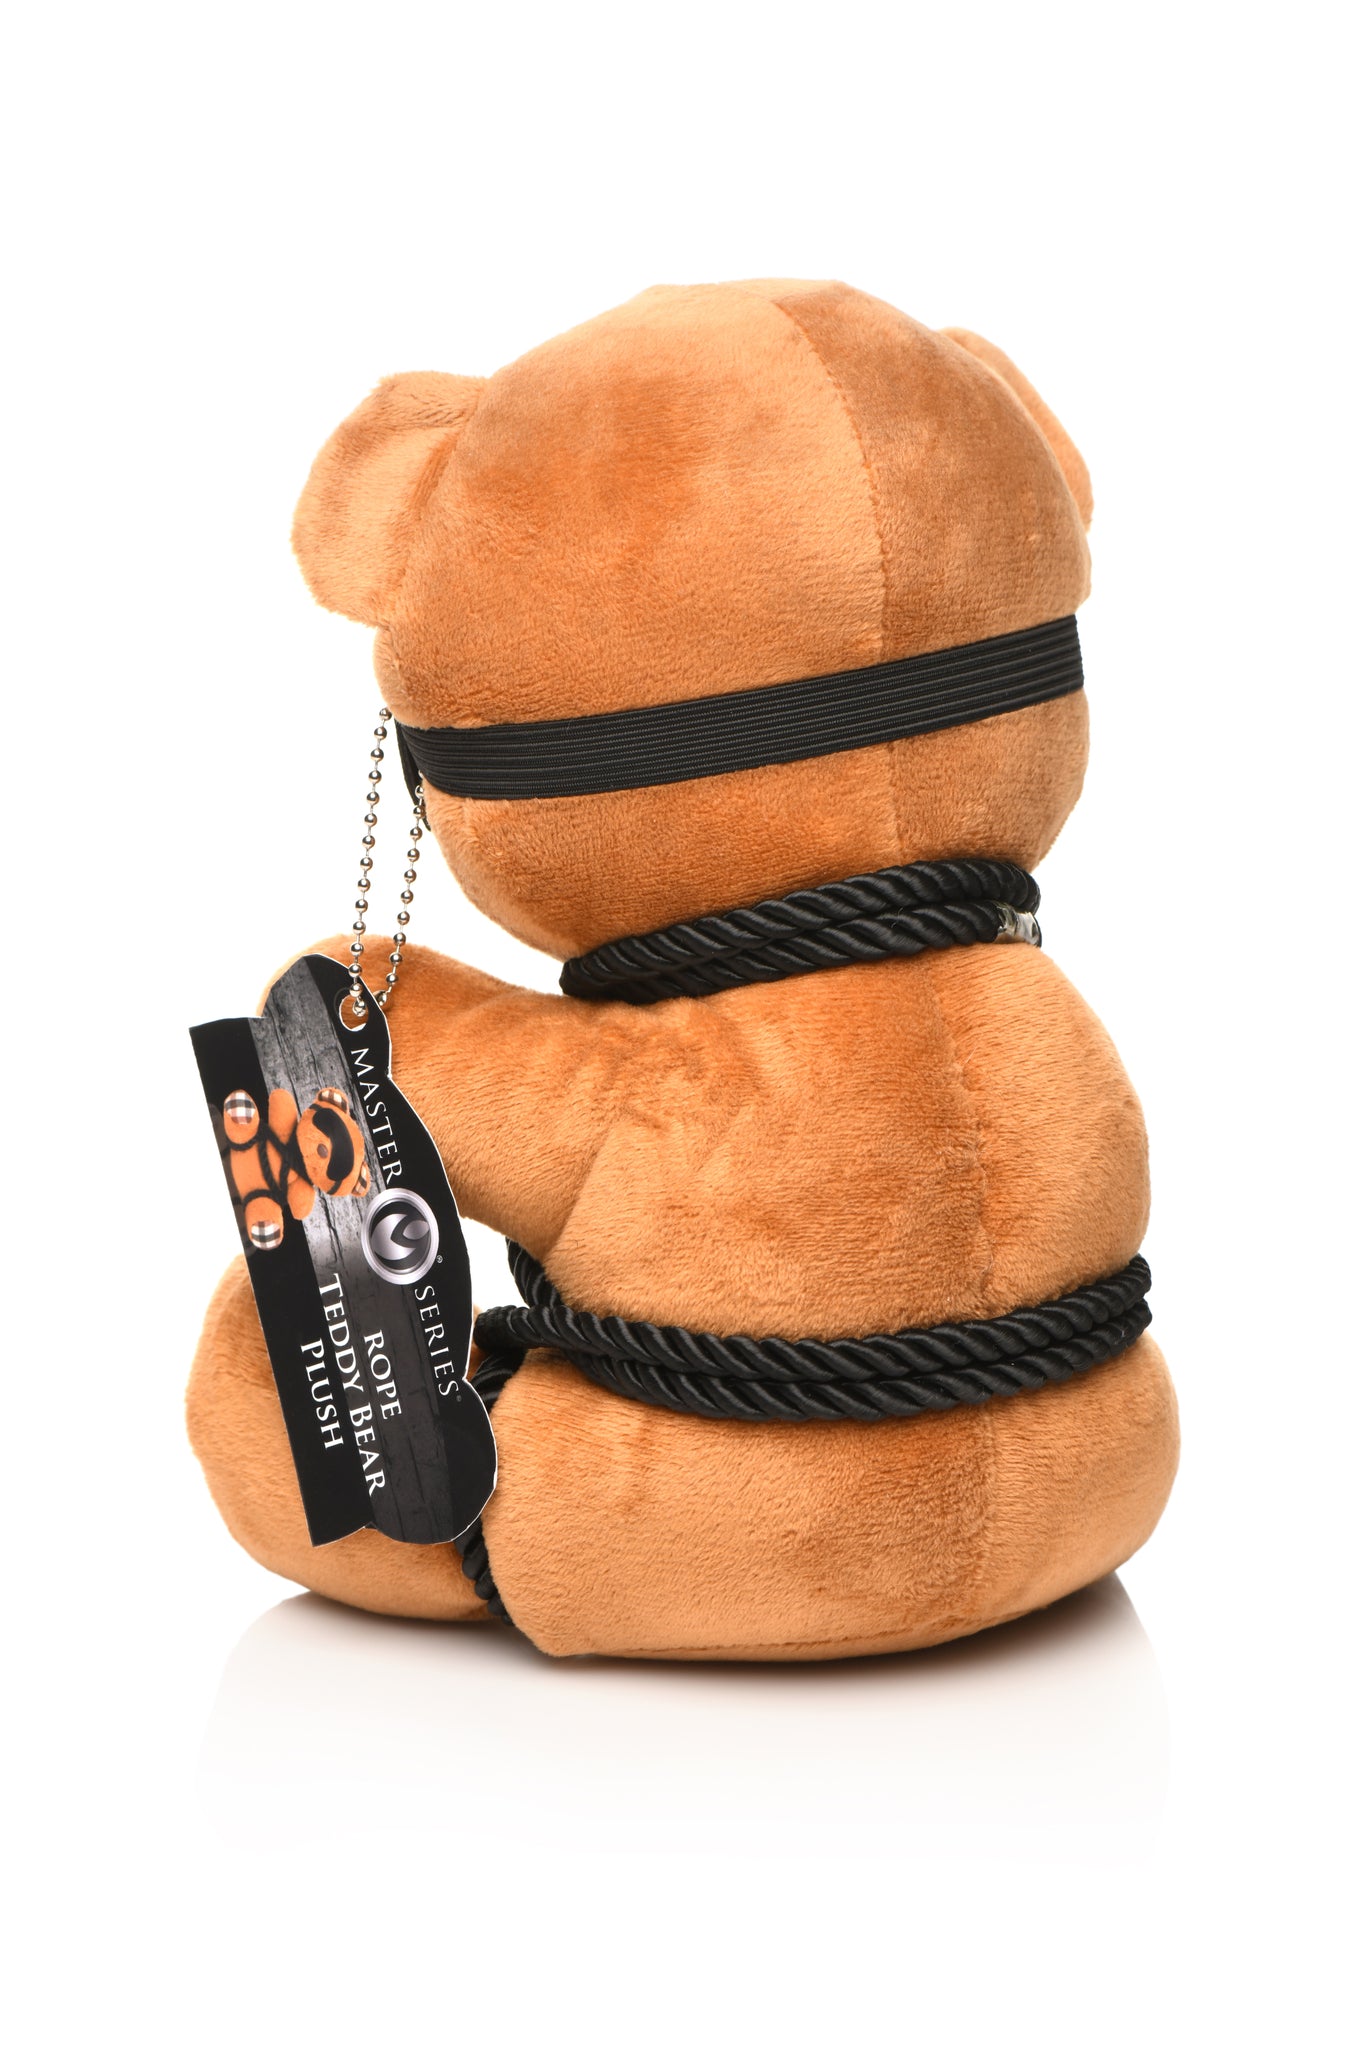 Master Series Rope Bondage Bear